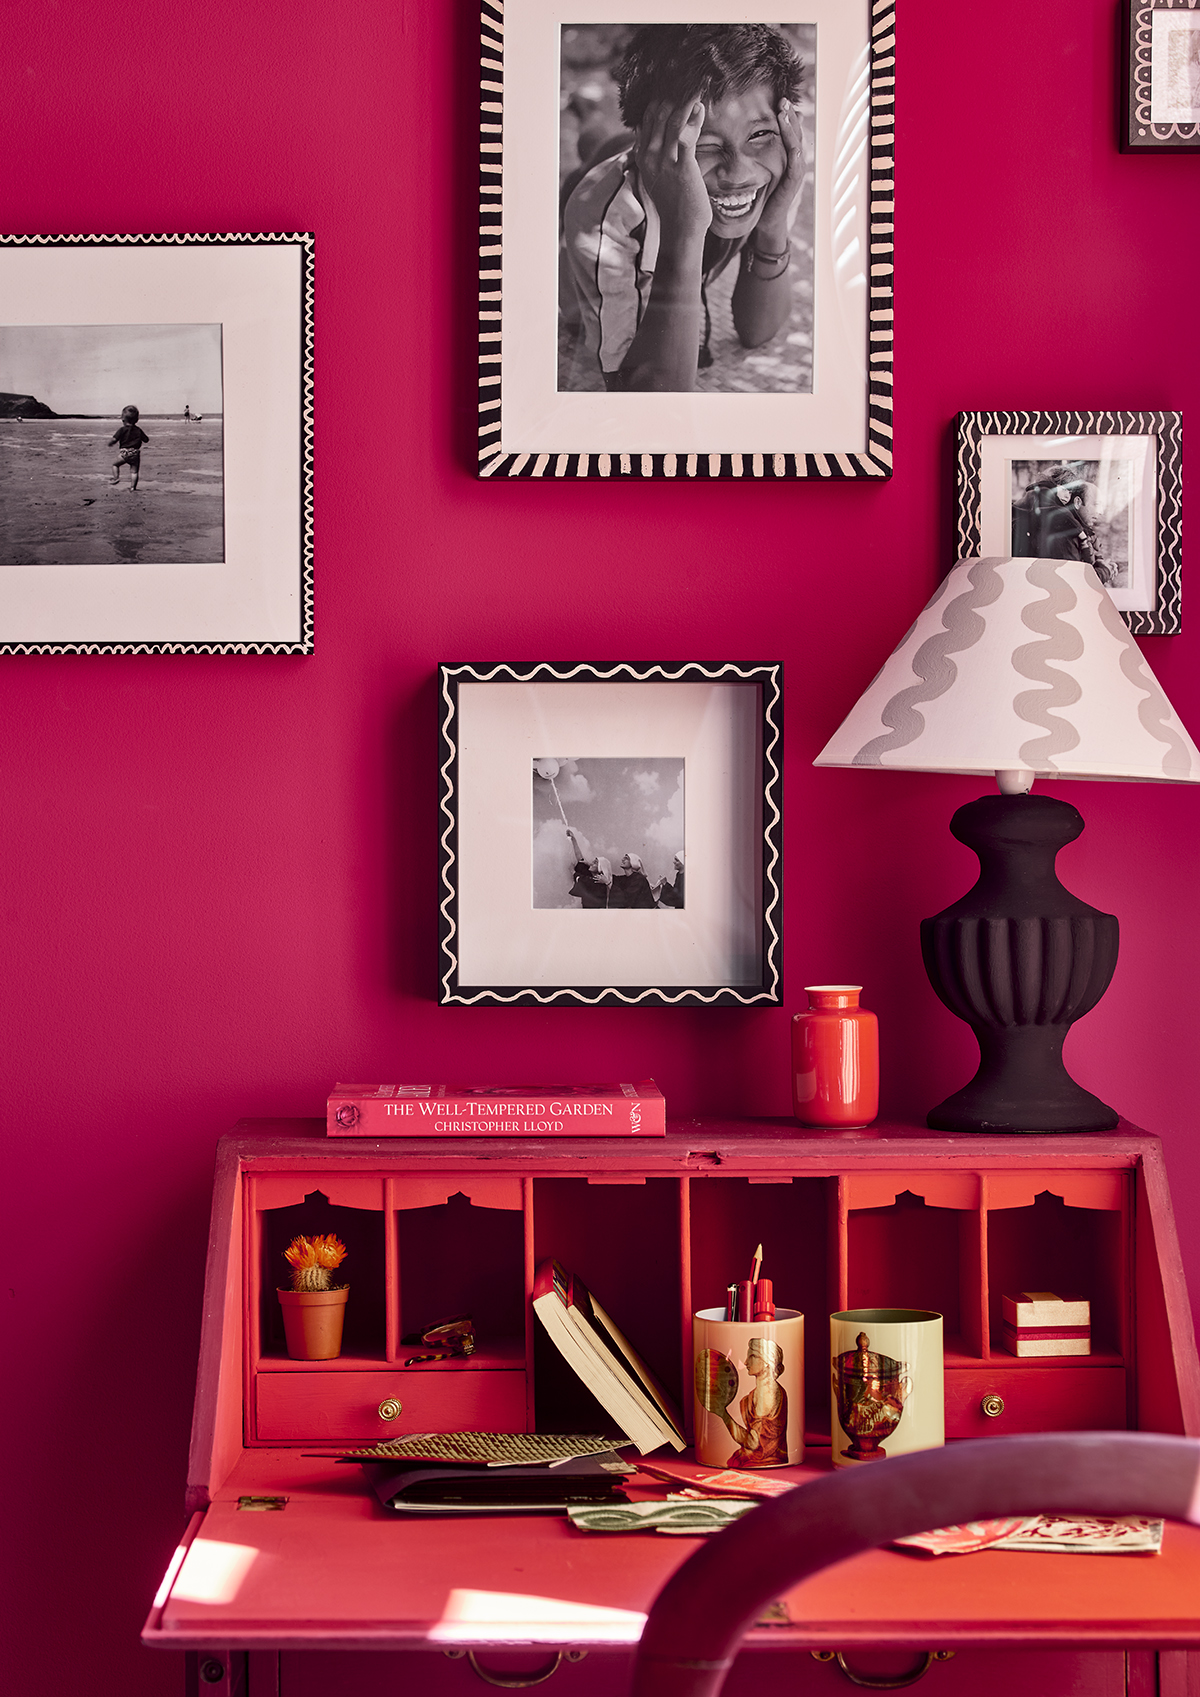 Annie Sloan Wall Paint  Capri Pink väggfärg rosa cerise  interiör glada ungmöns diversehandel 1